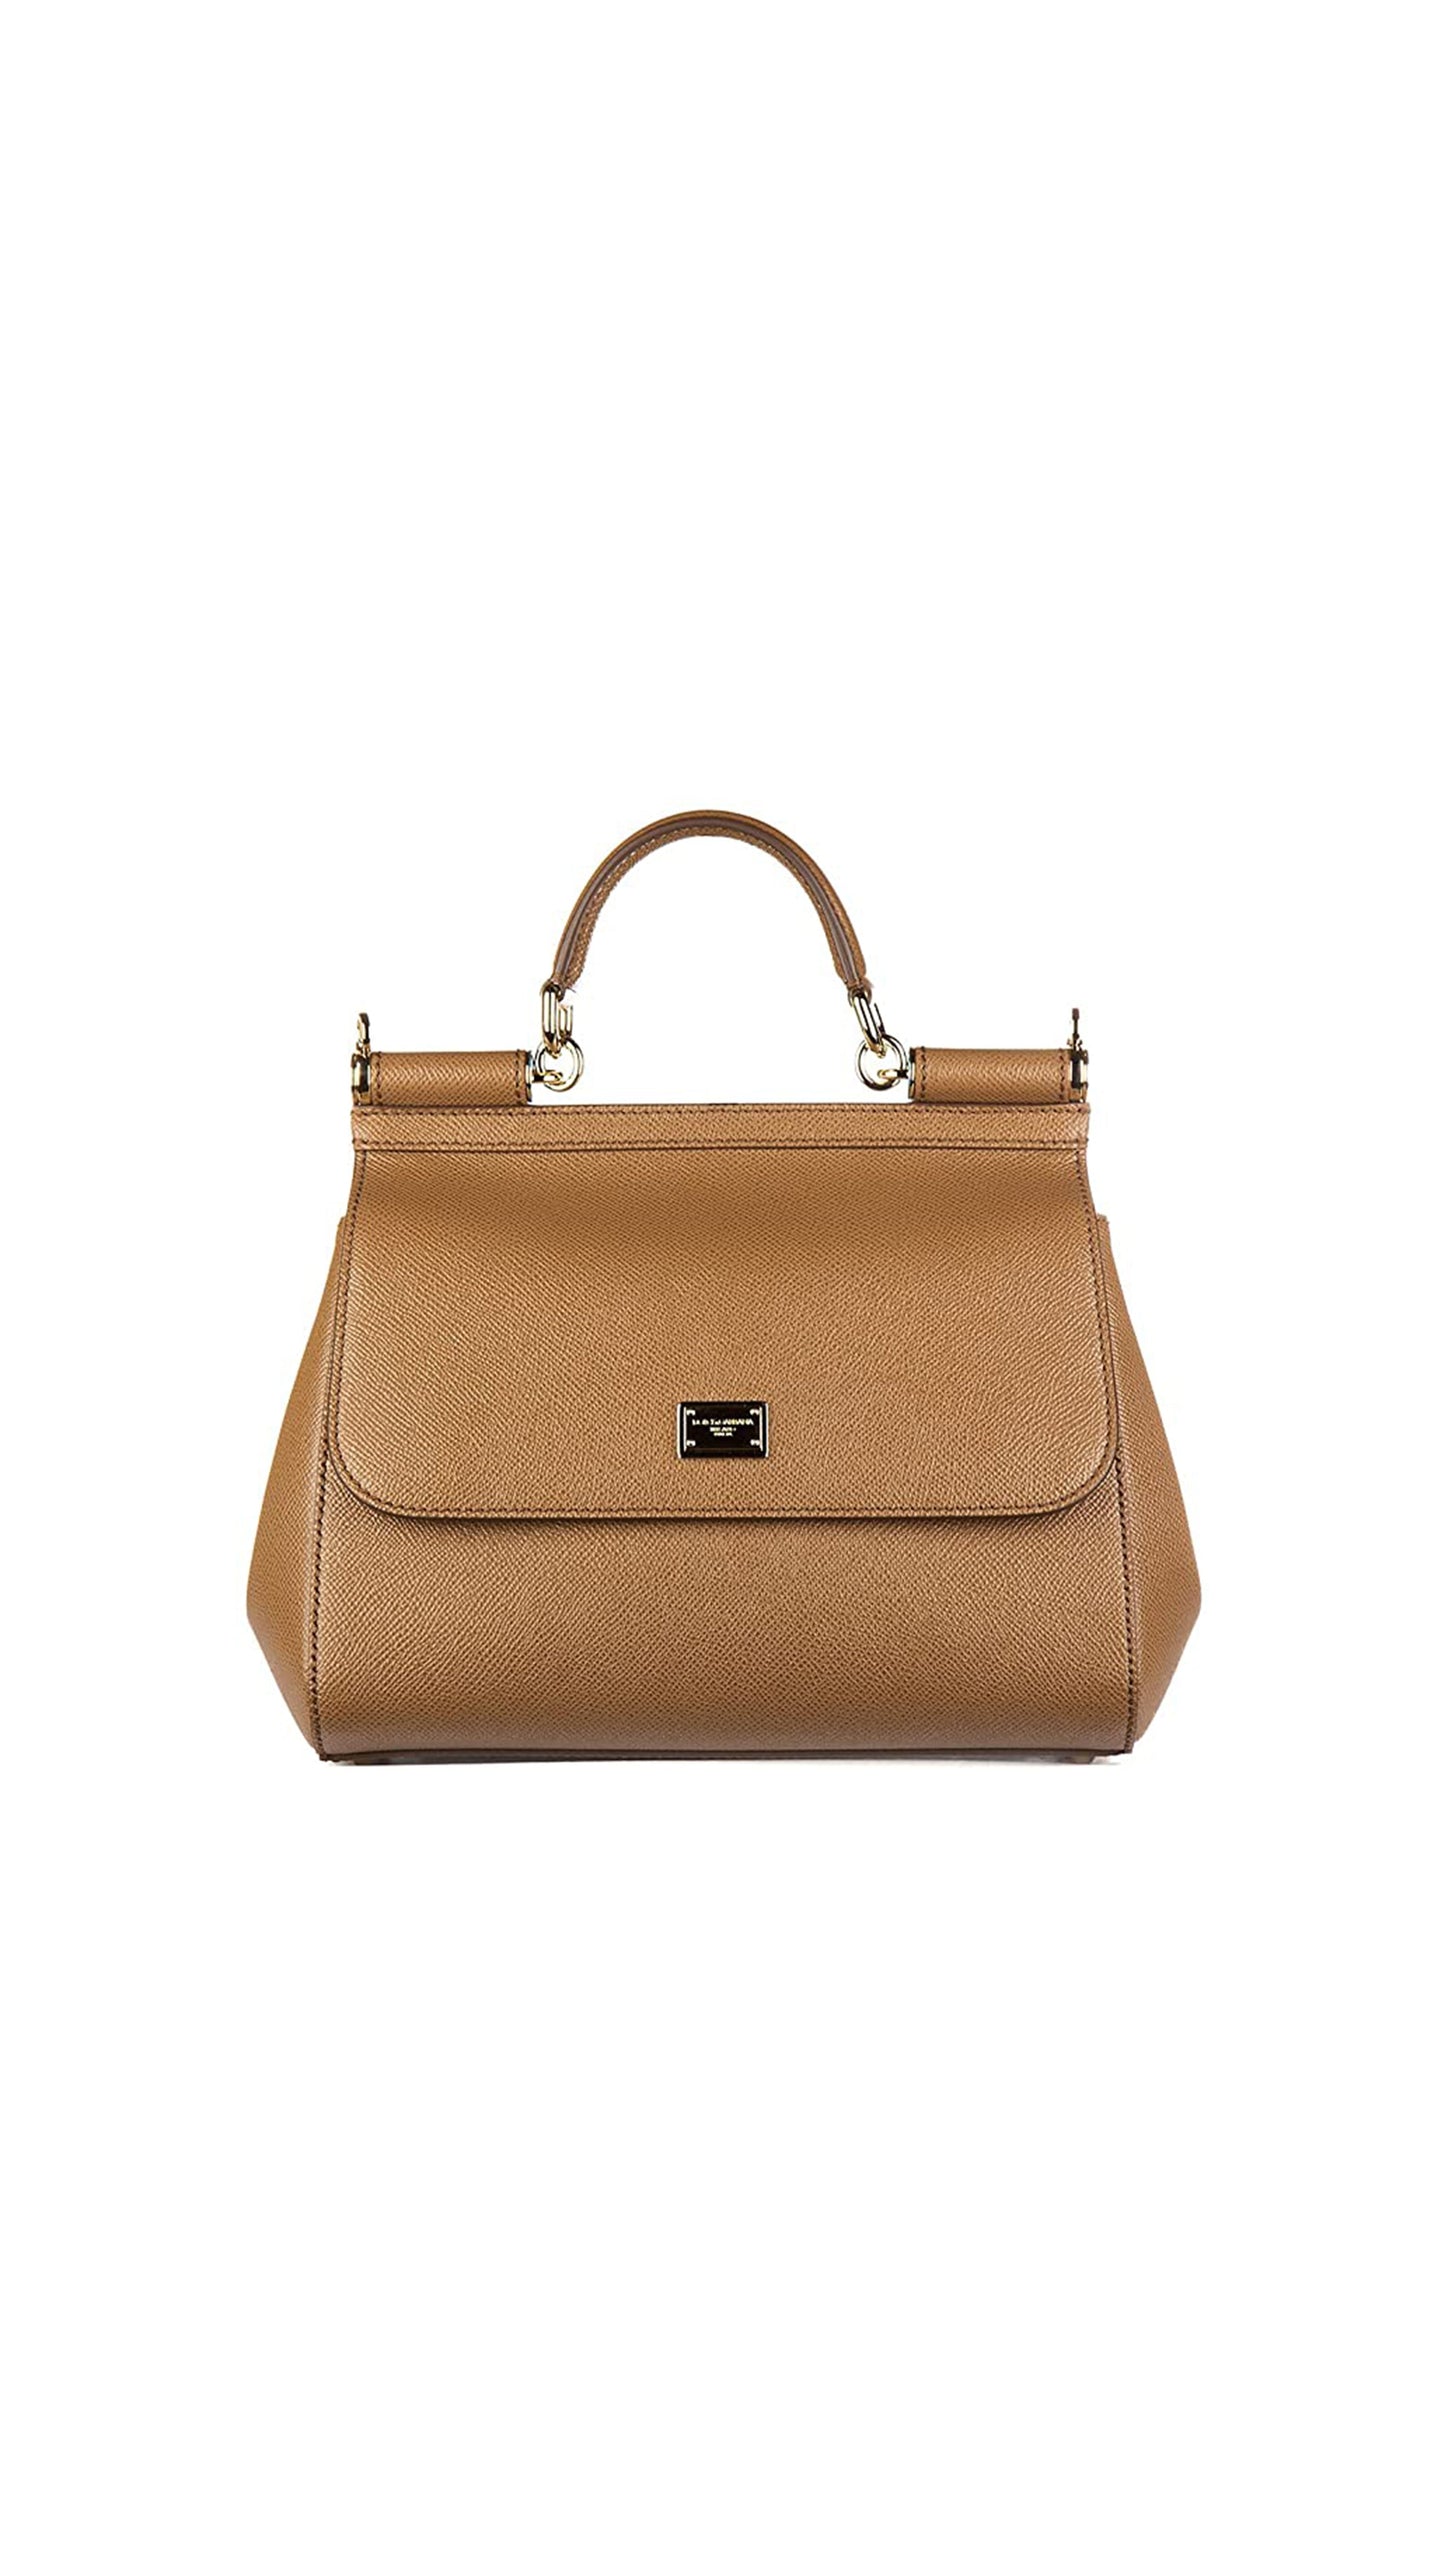 Medium Sicily Handbag in Dauphne Leather - Tan